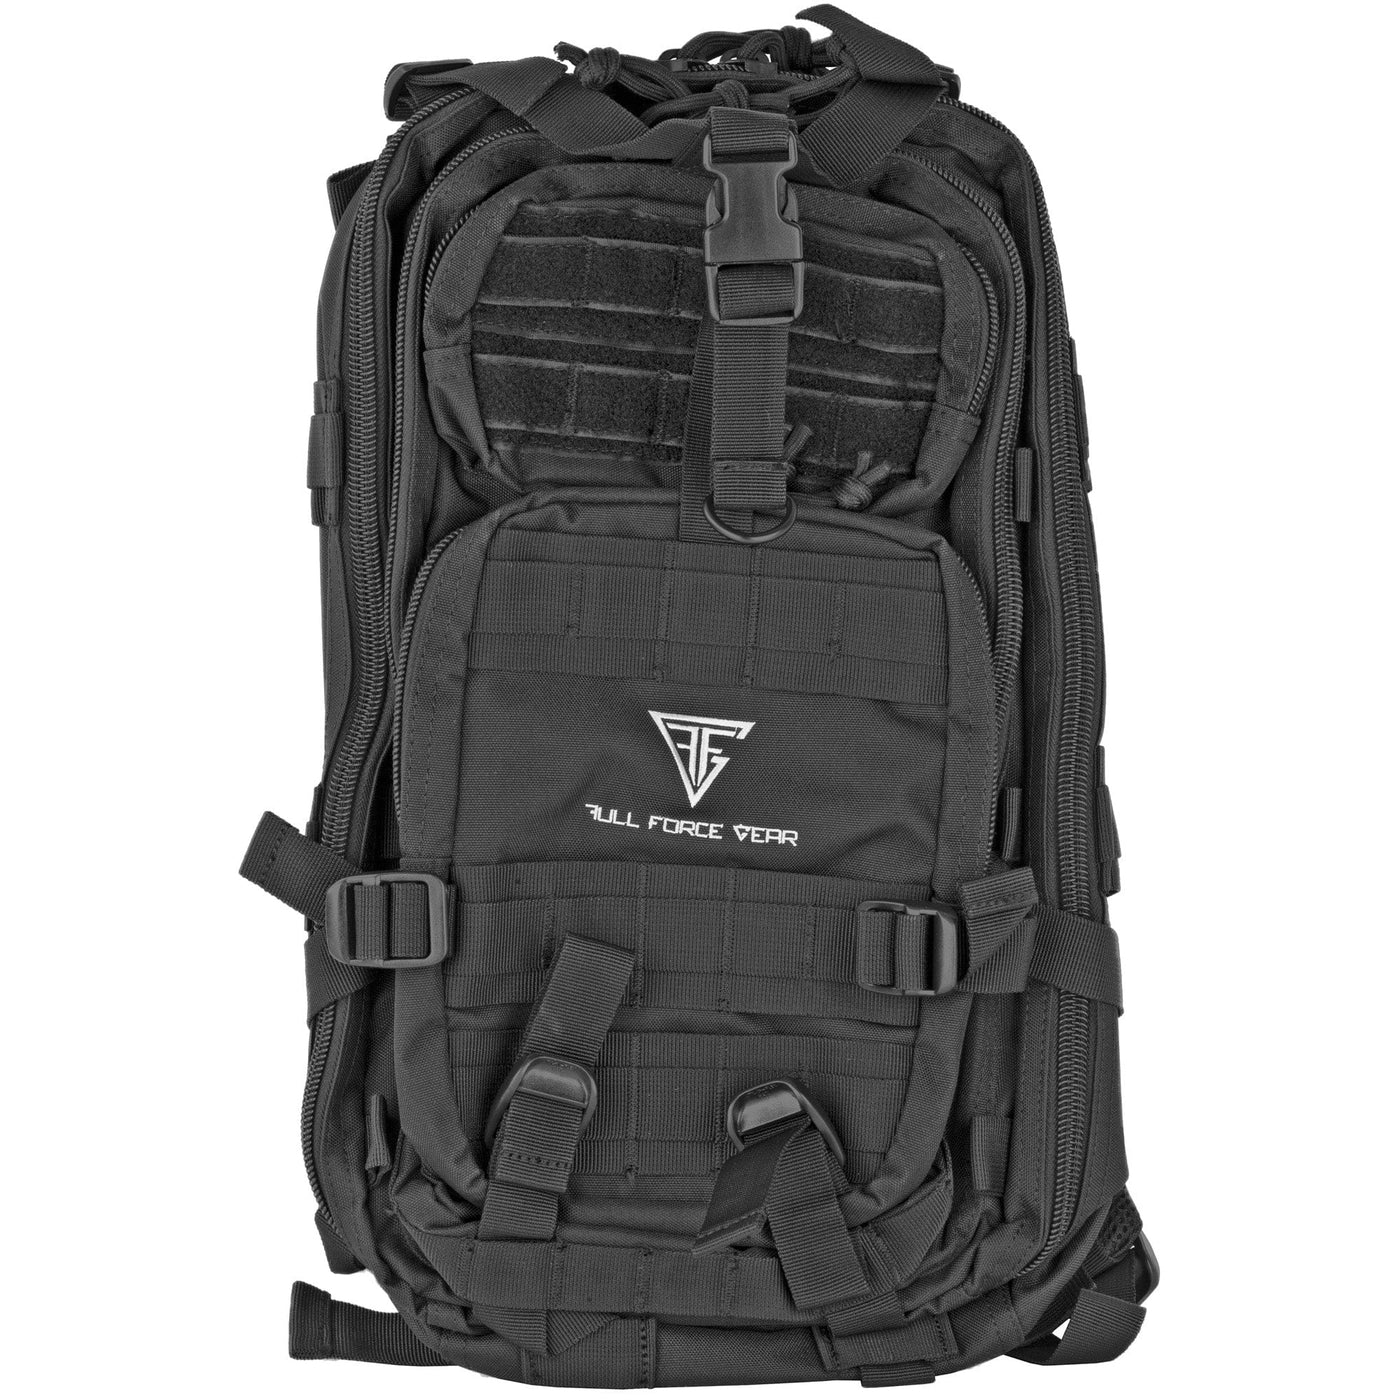 Full Forge Gear Full Forge Hurricane Tac Backpack Black Soft Gun Cases